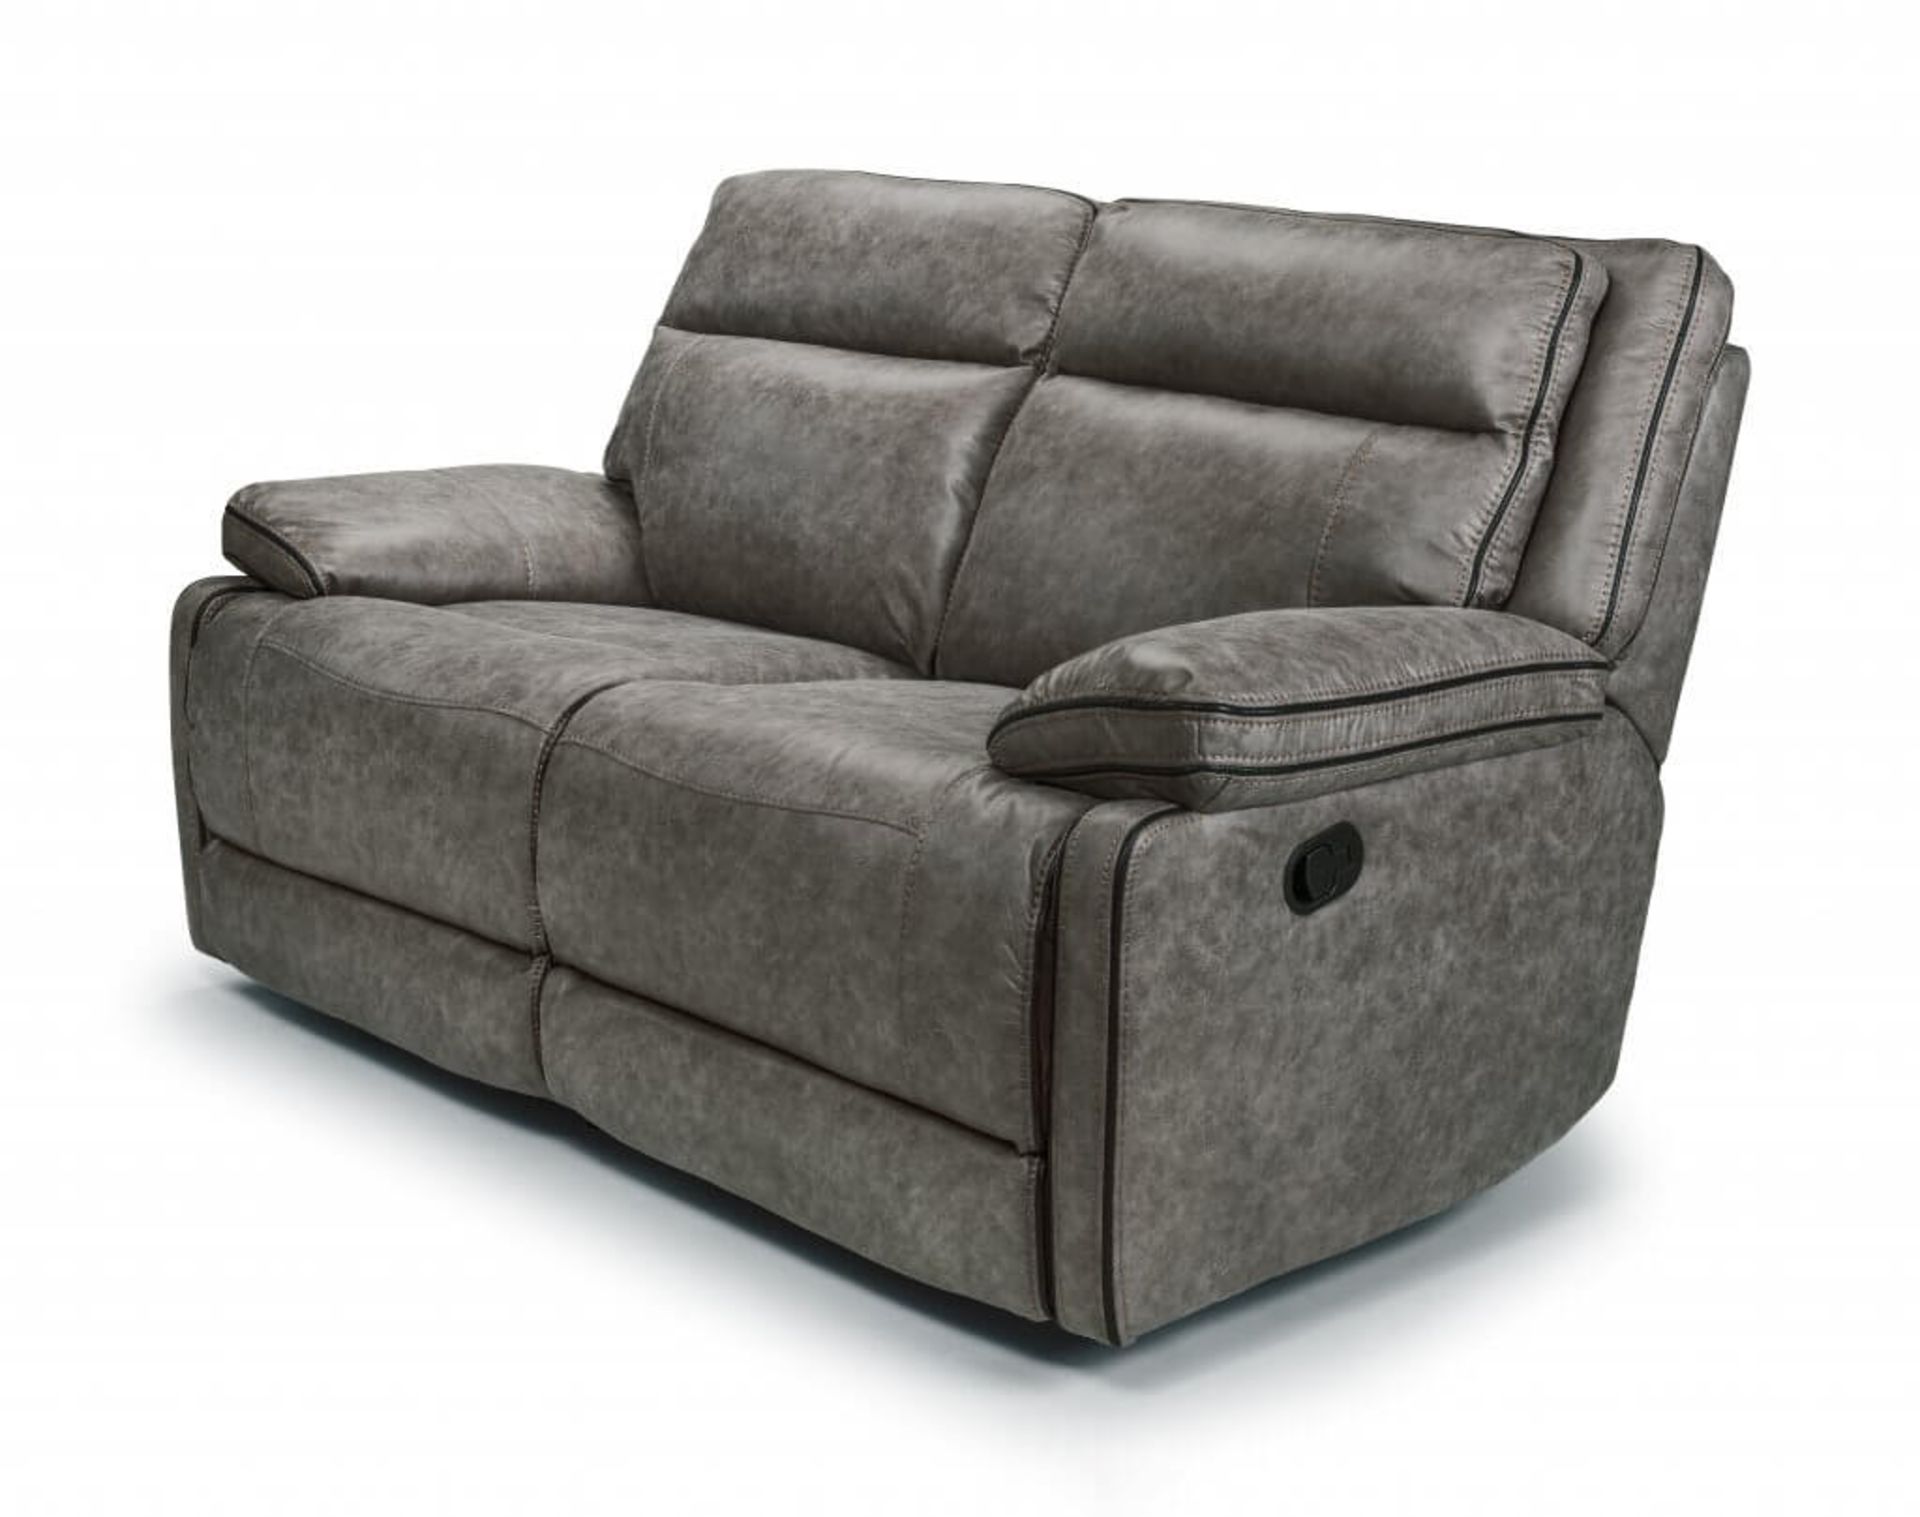 Brand new boxed Cheltenham dark grey leather 2 seater manual reclining sofa